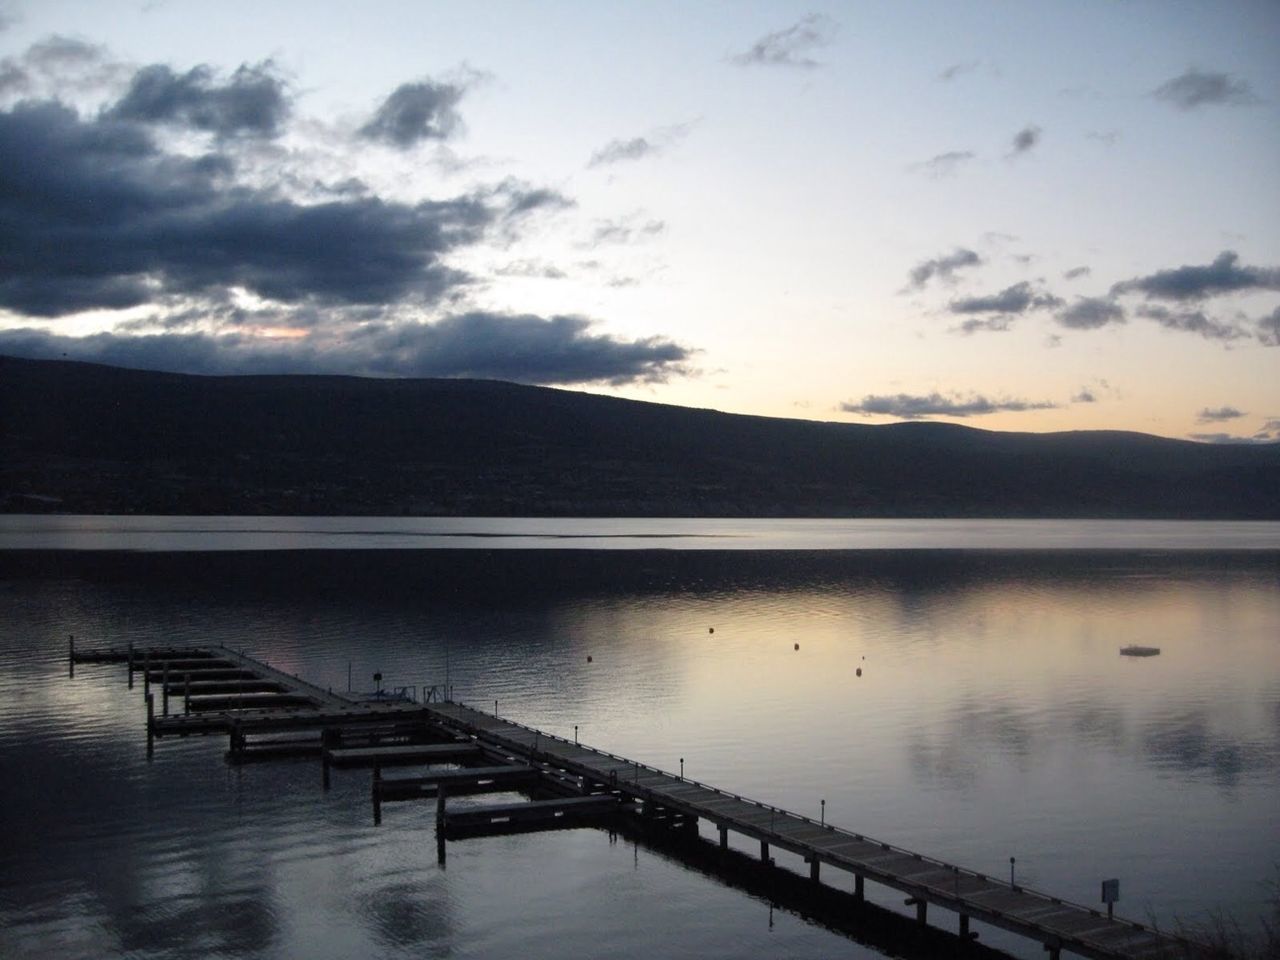 Pier on calm lake against silhouette mountain range